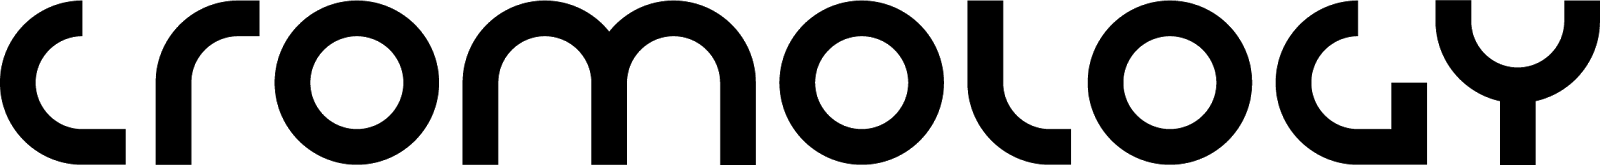 Cromology-logo-2015